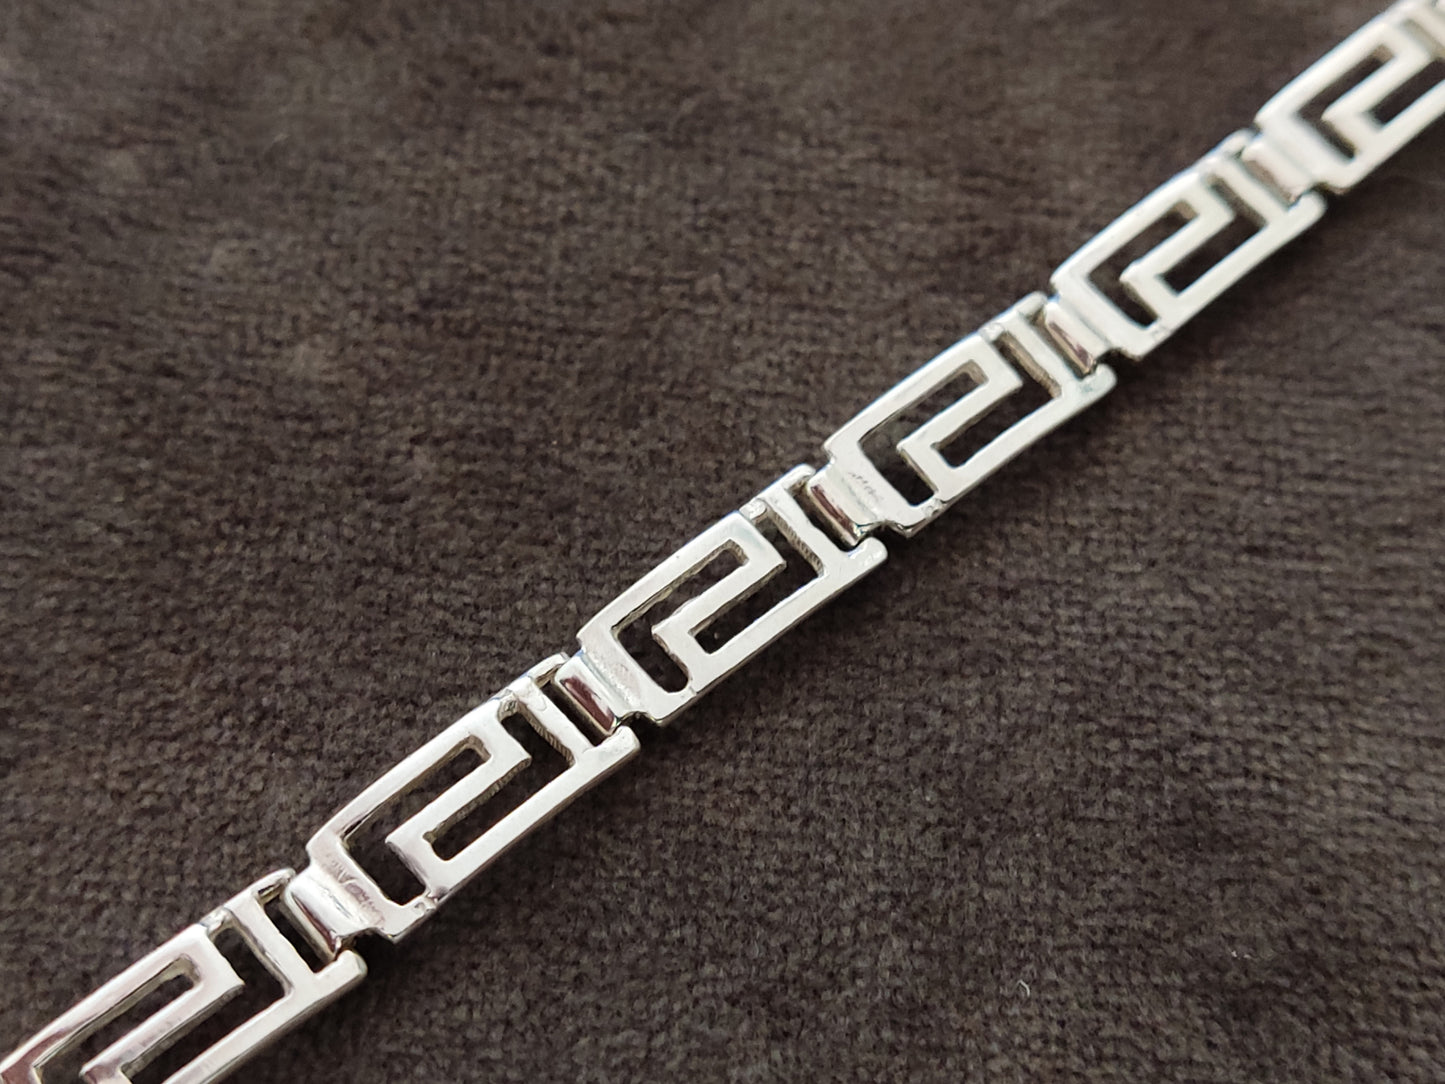 Greek key bracelet made of sterling silver 925 measuring 6mm width on gray velvet background.